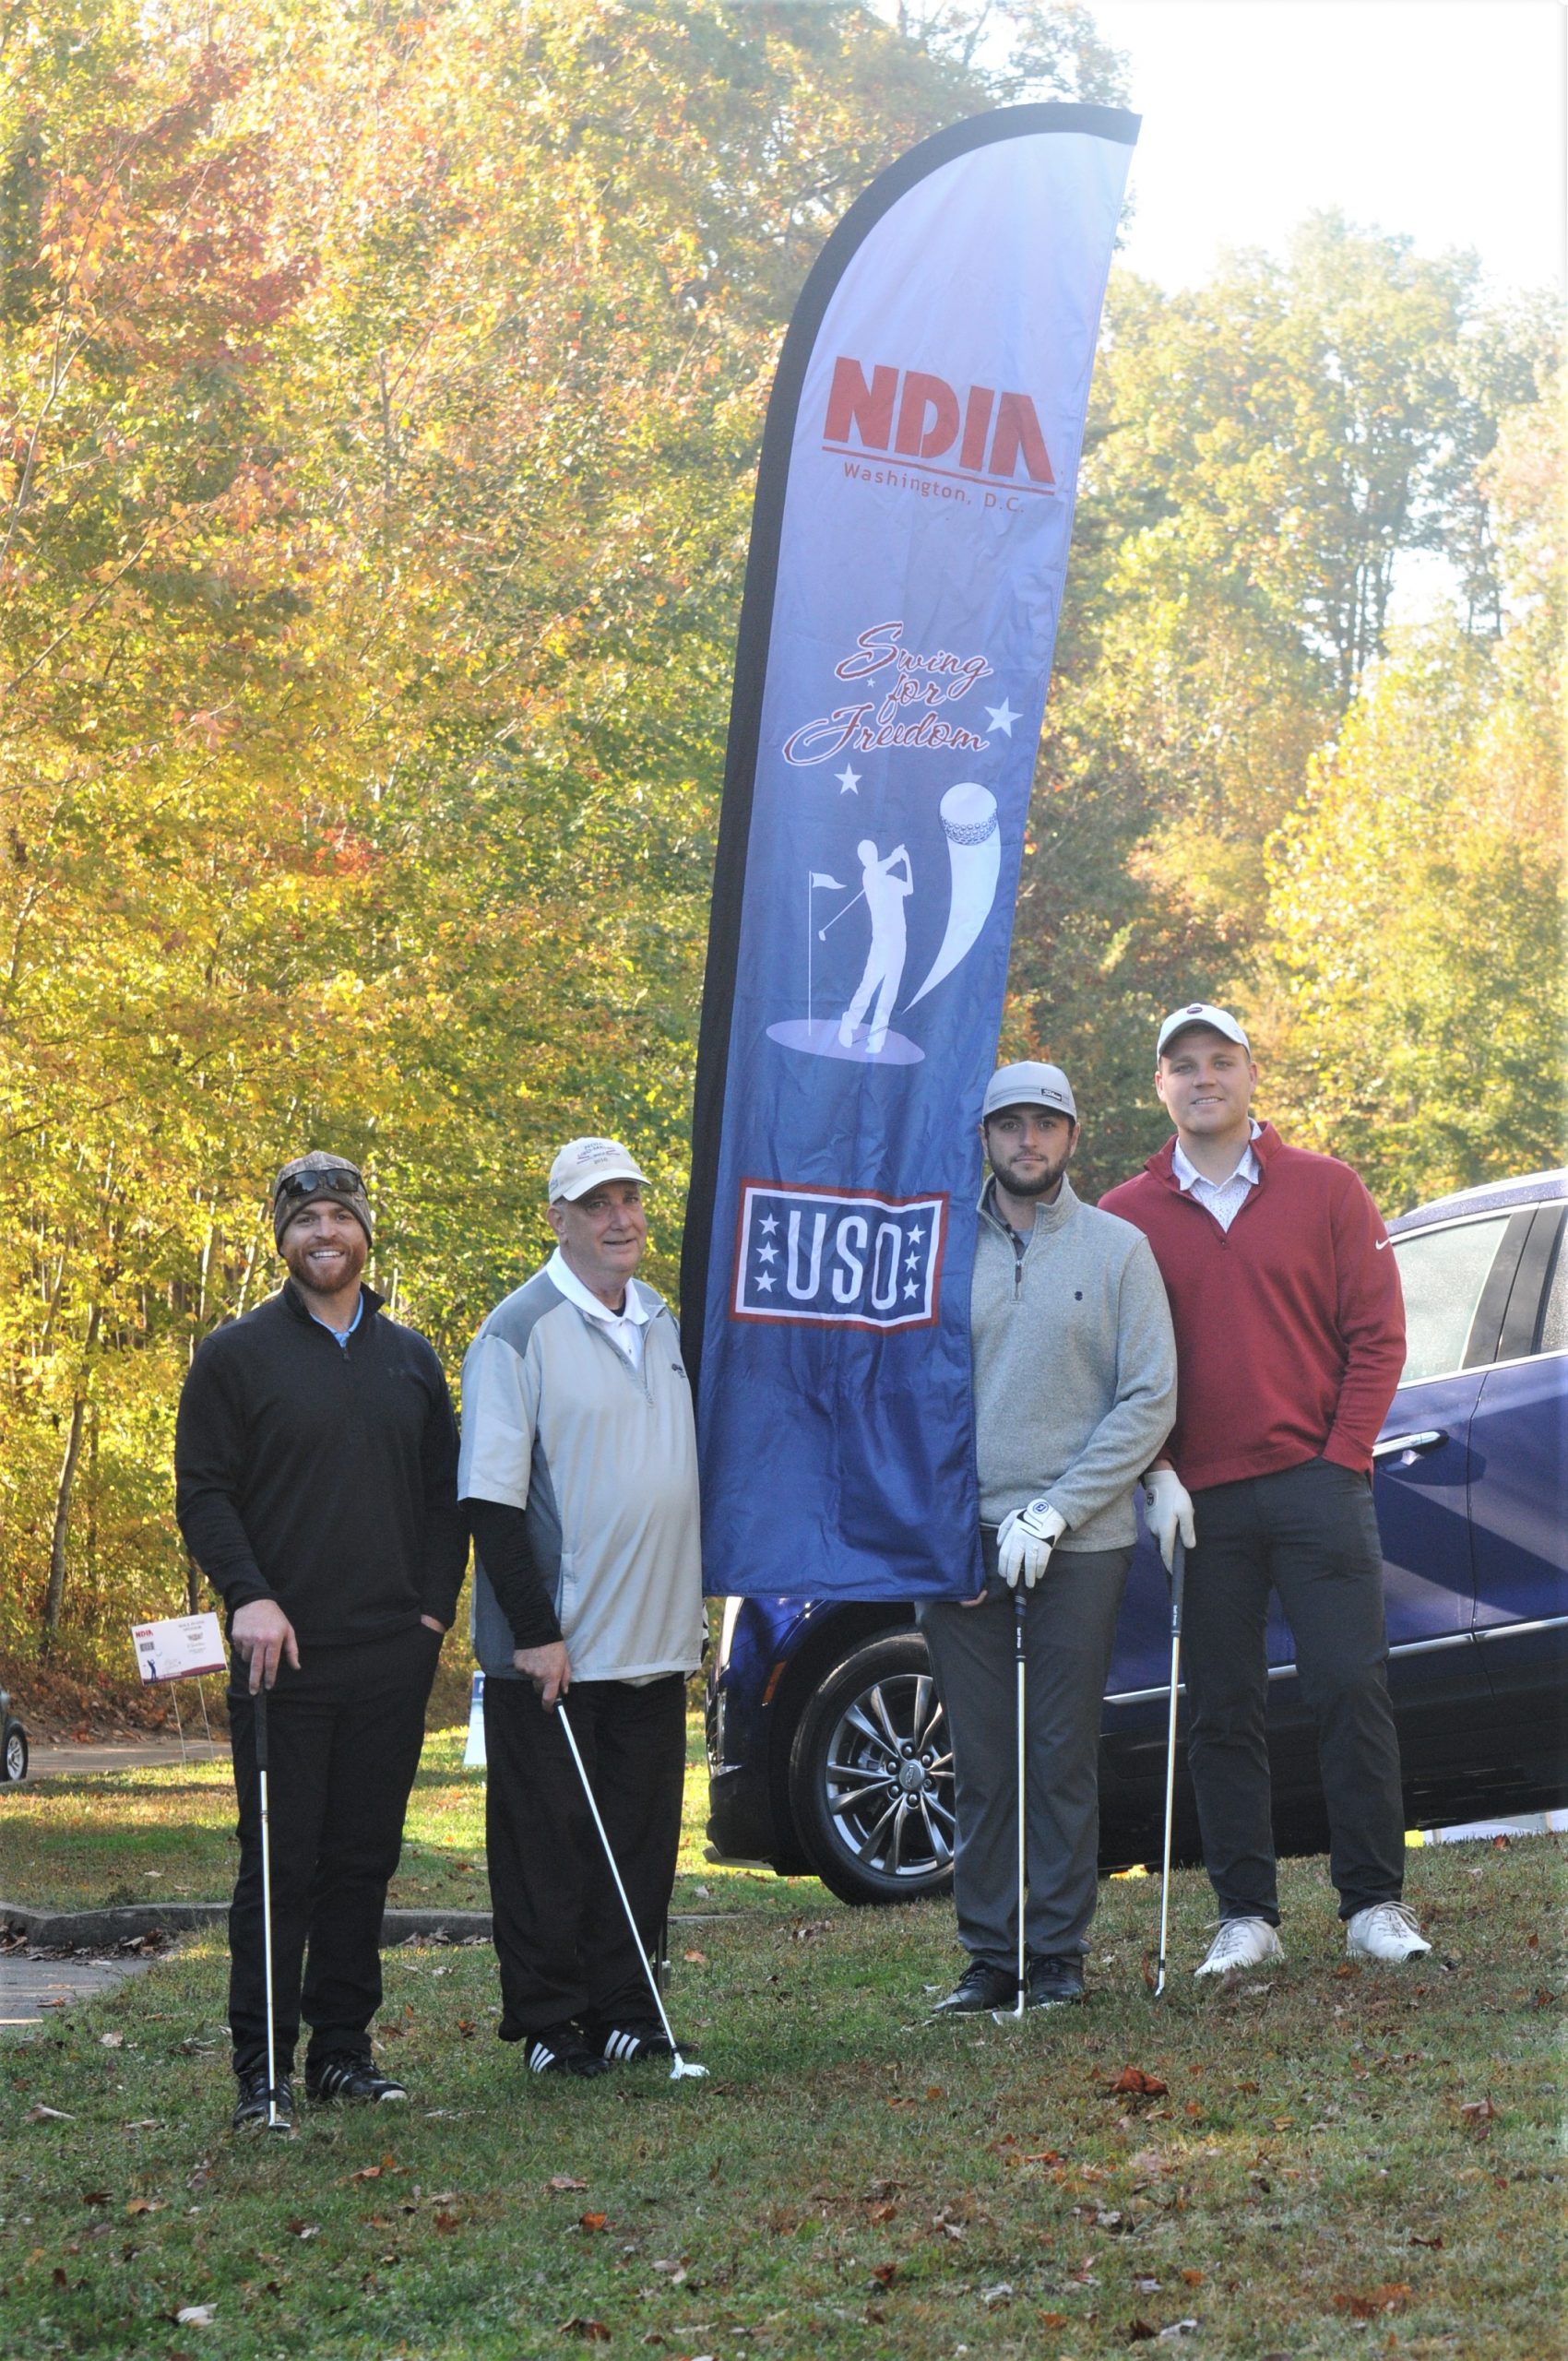 Logistics Plus Represented at the NDIA Golf Invitational